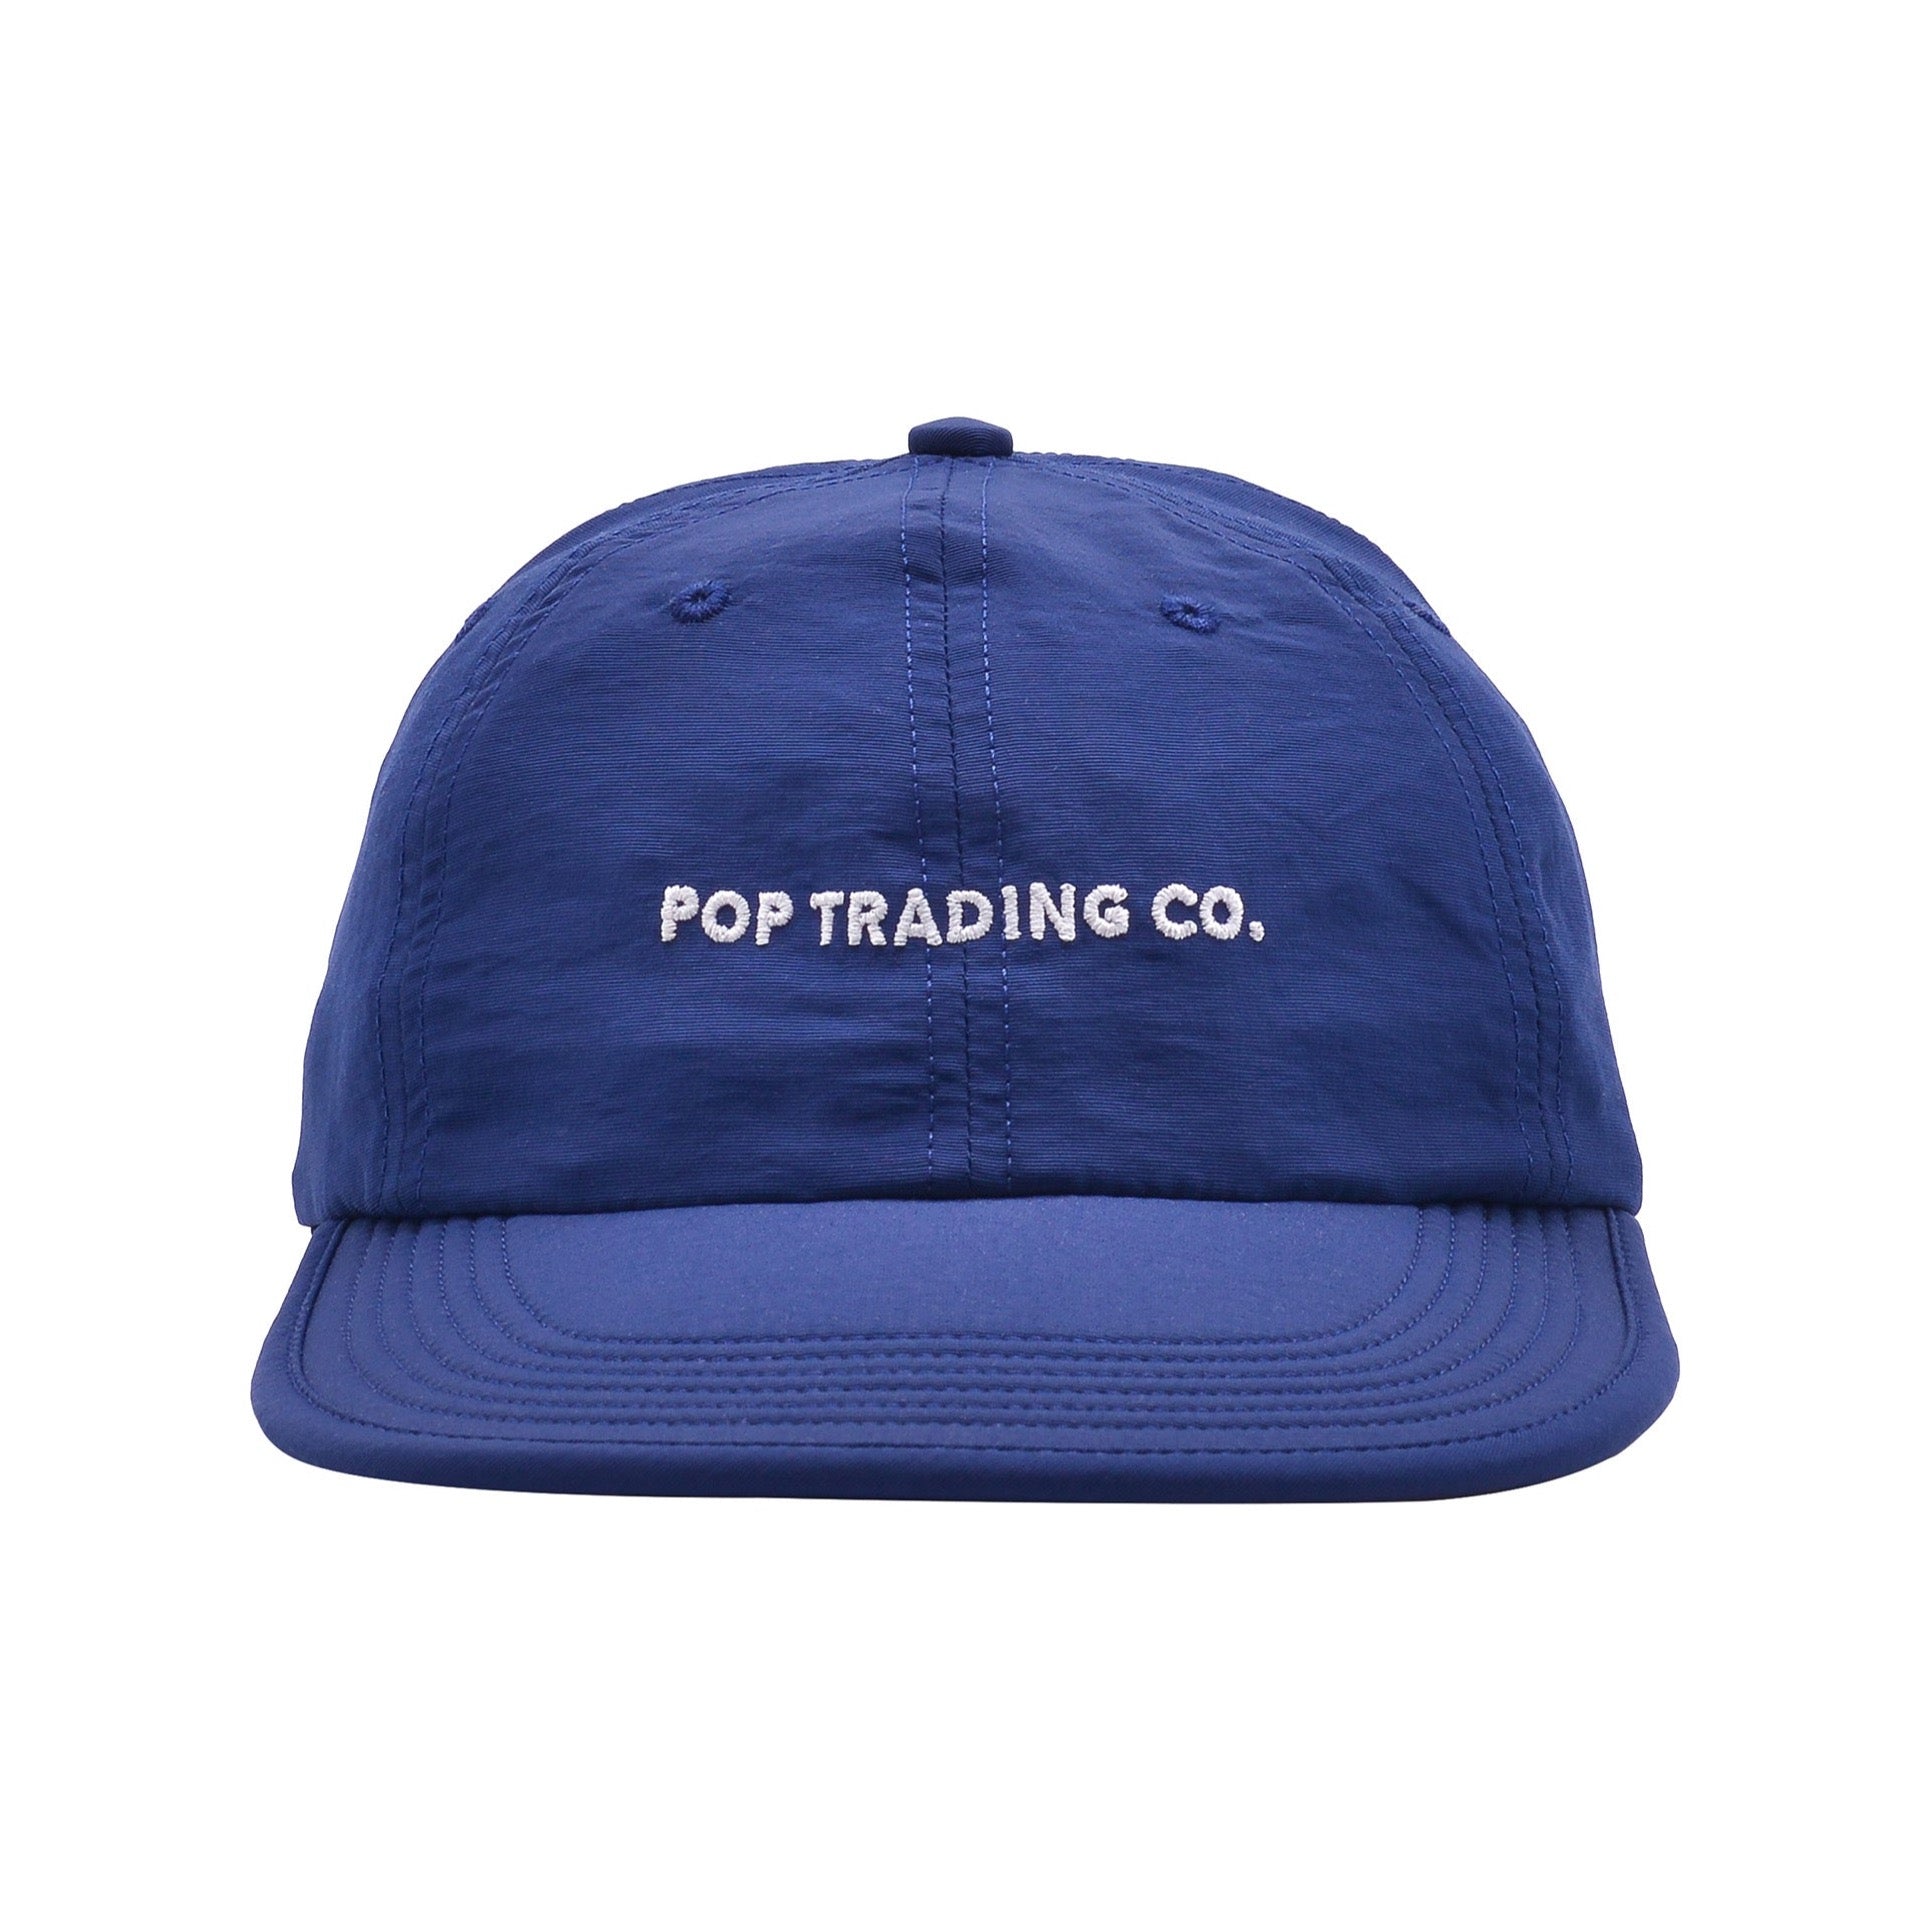 Pop Trading Company - Pop Trading Company - Flex Foam Six Panel Cap - Navy